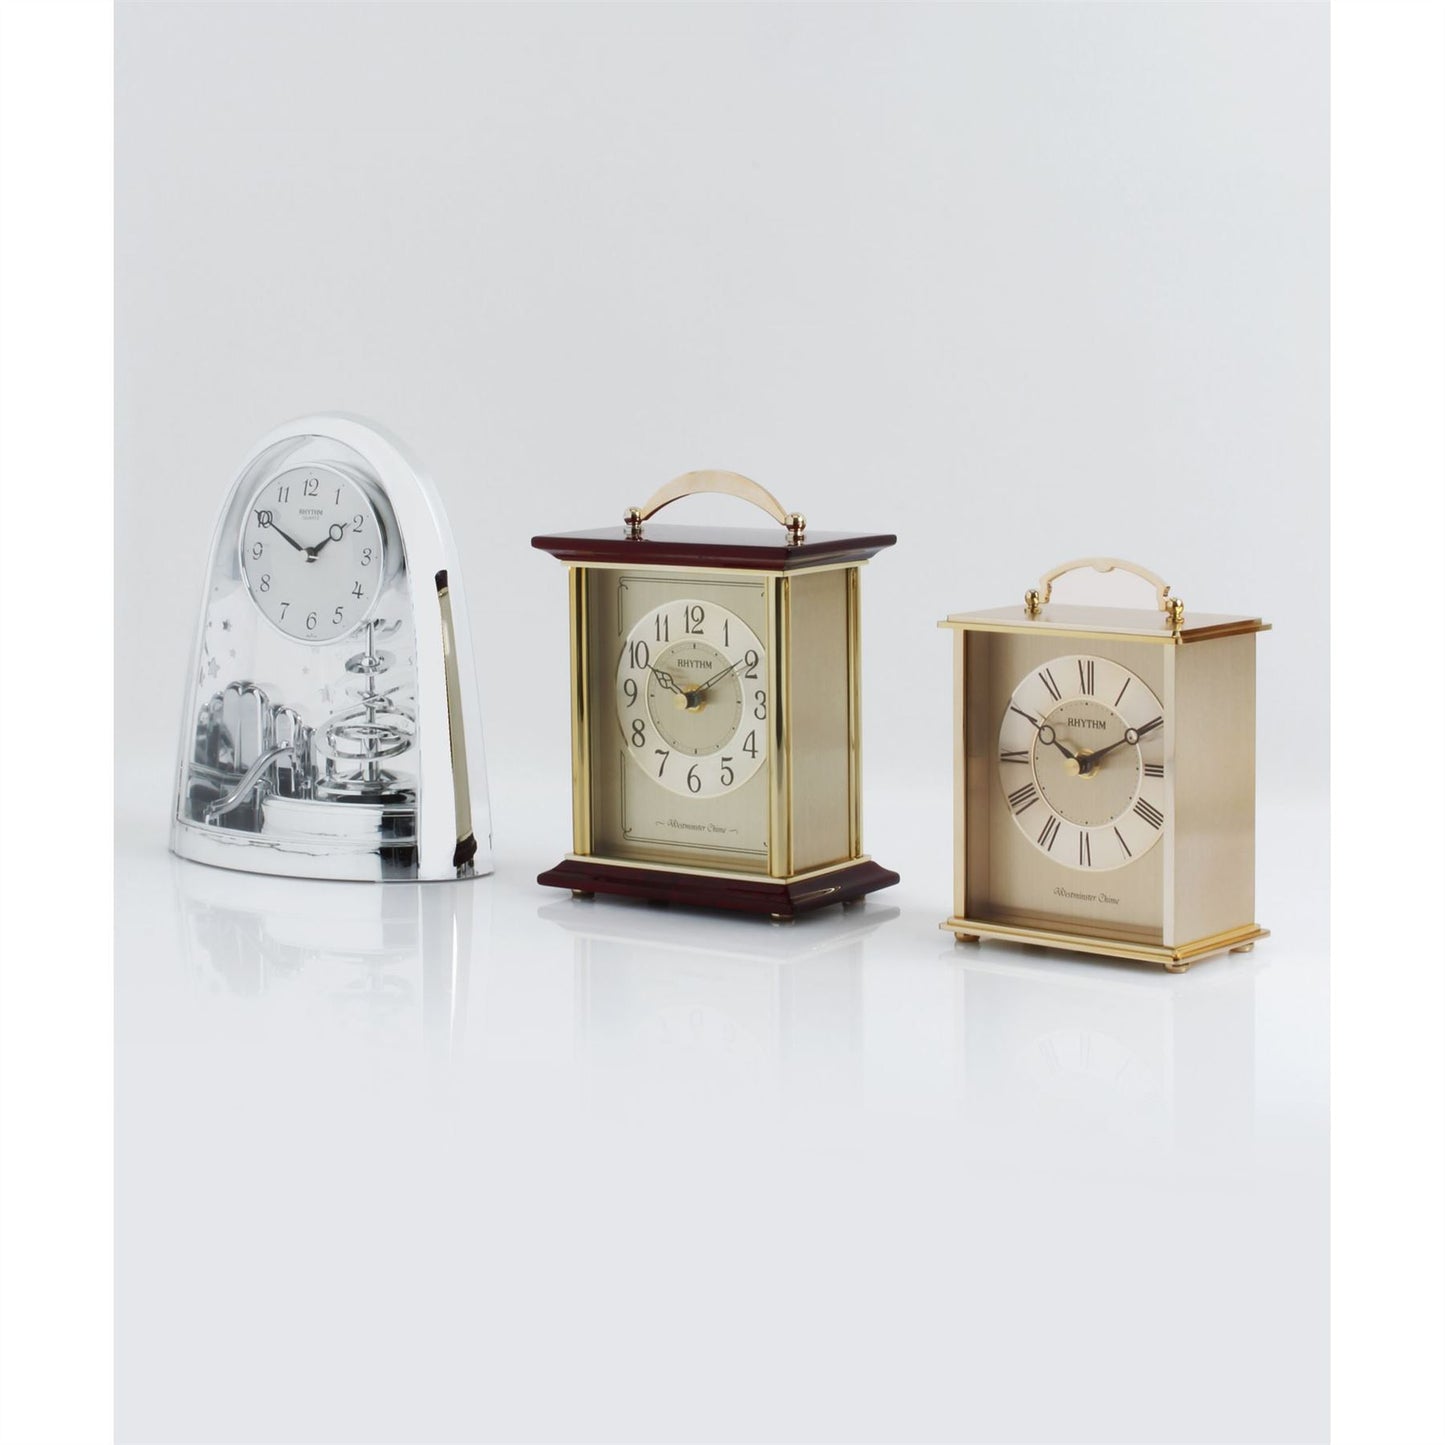 Rhythm Cont Mantel Clock Arched Top/Sprial Pendulum Silver